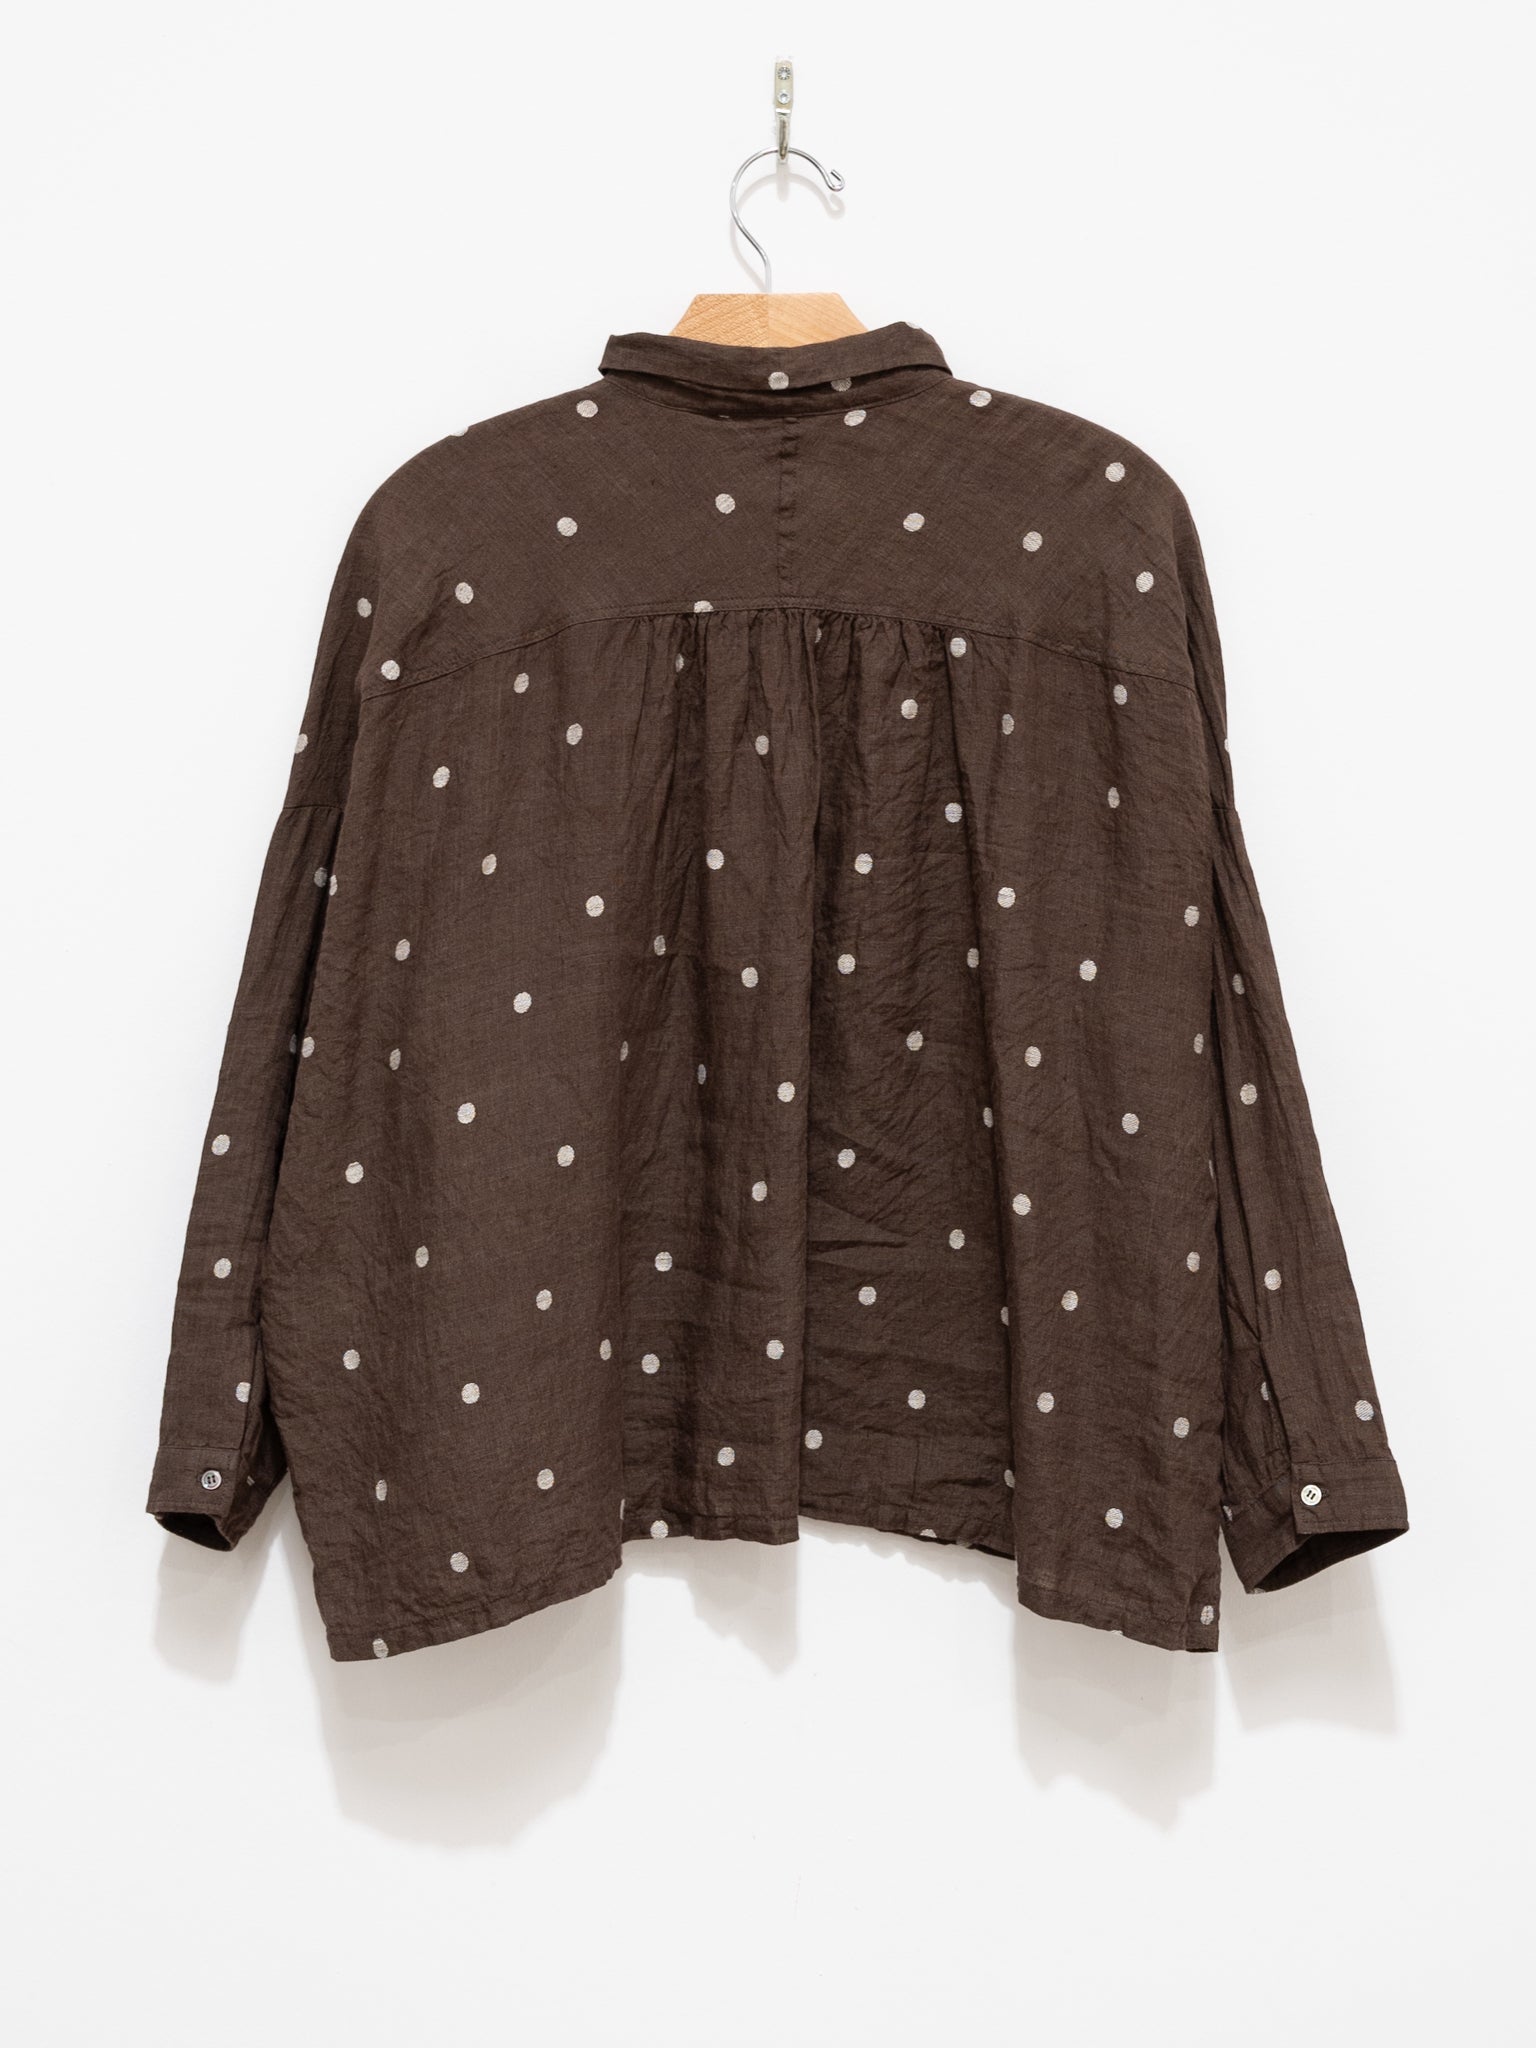 Namu Shop - Ichi Antiquites Linen Dot Shirt - Brown x Natural